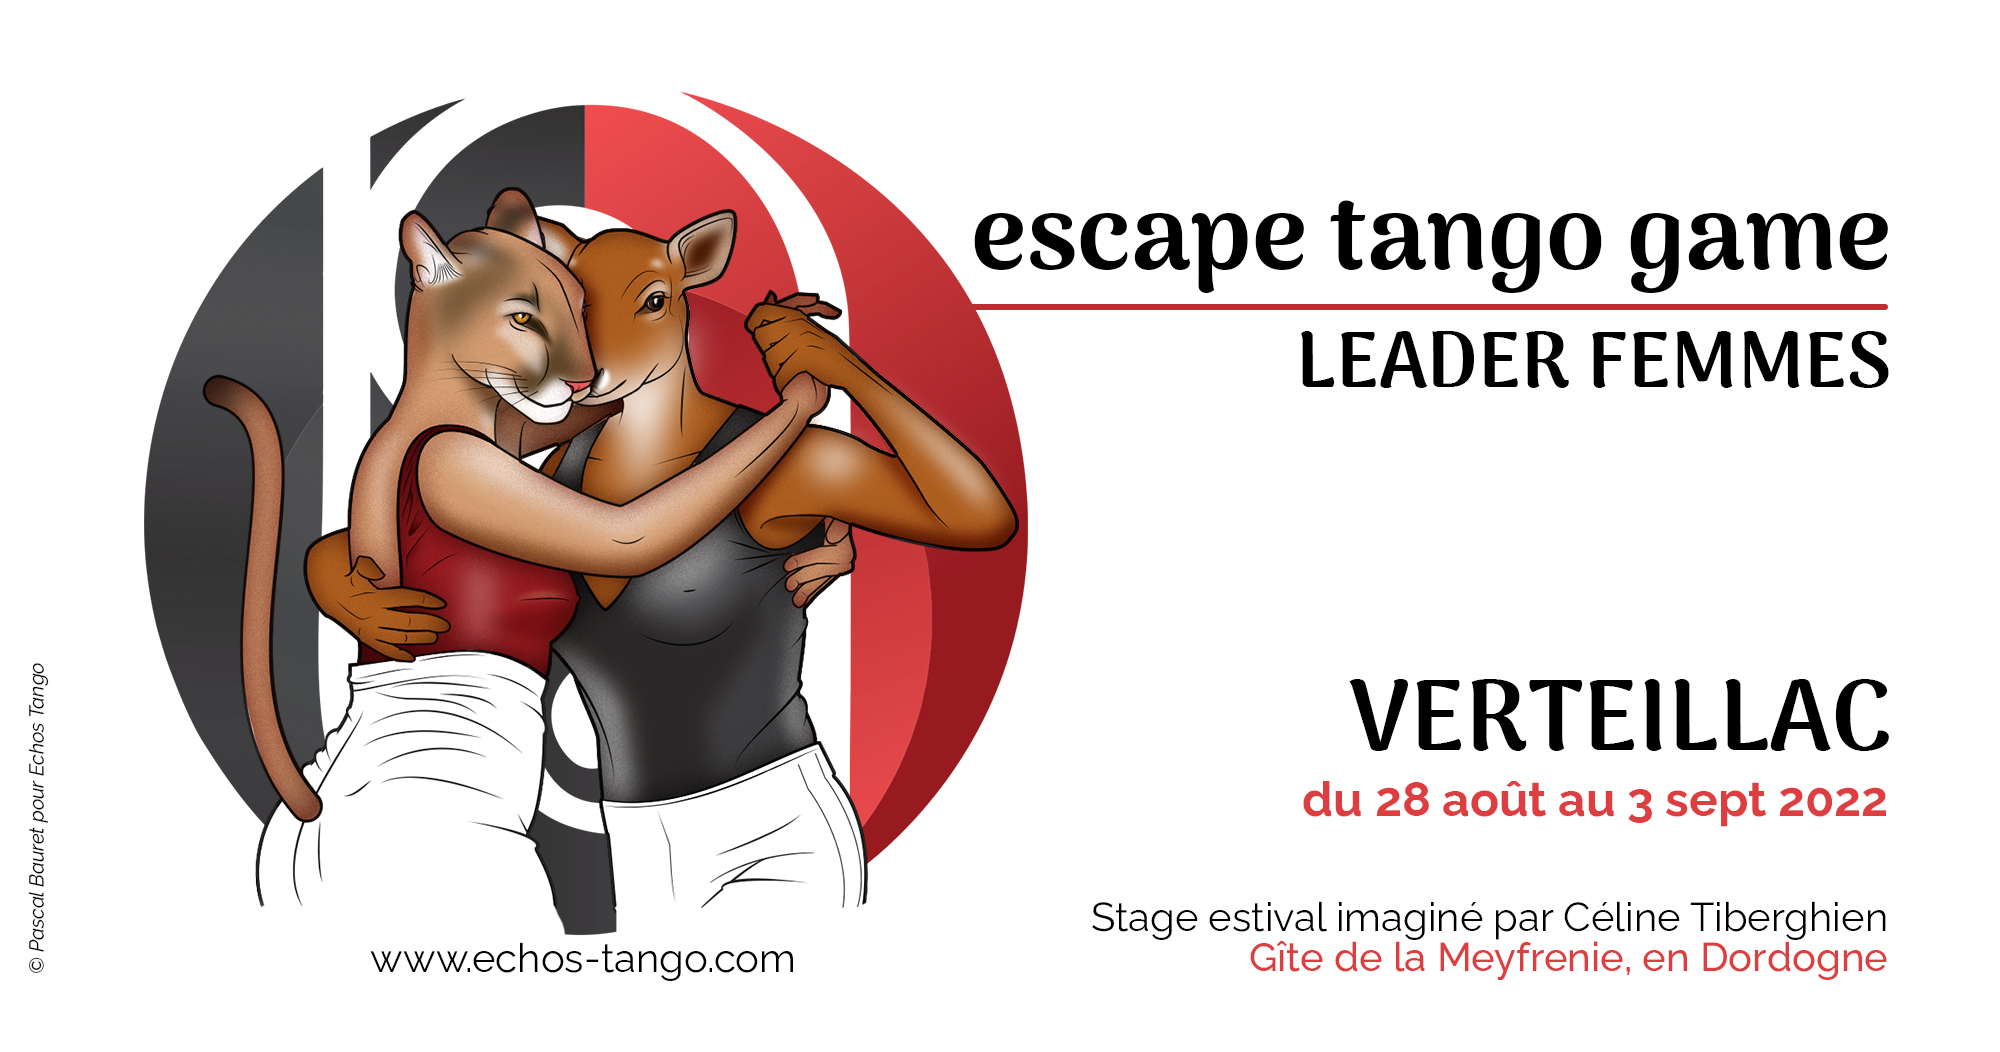 ESCAPE TANGO GAME – LEADER FEMMES